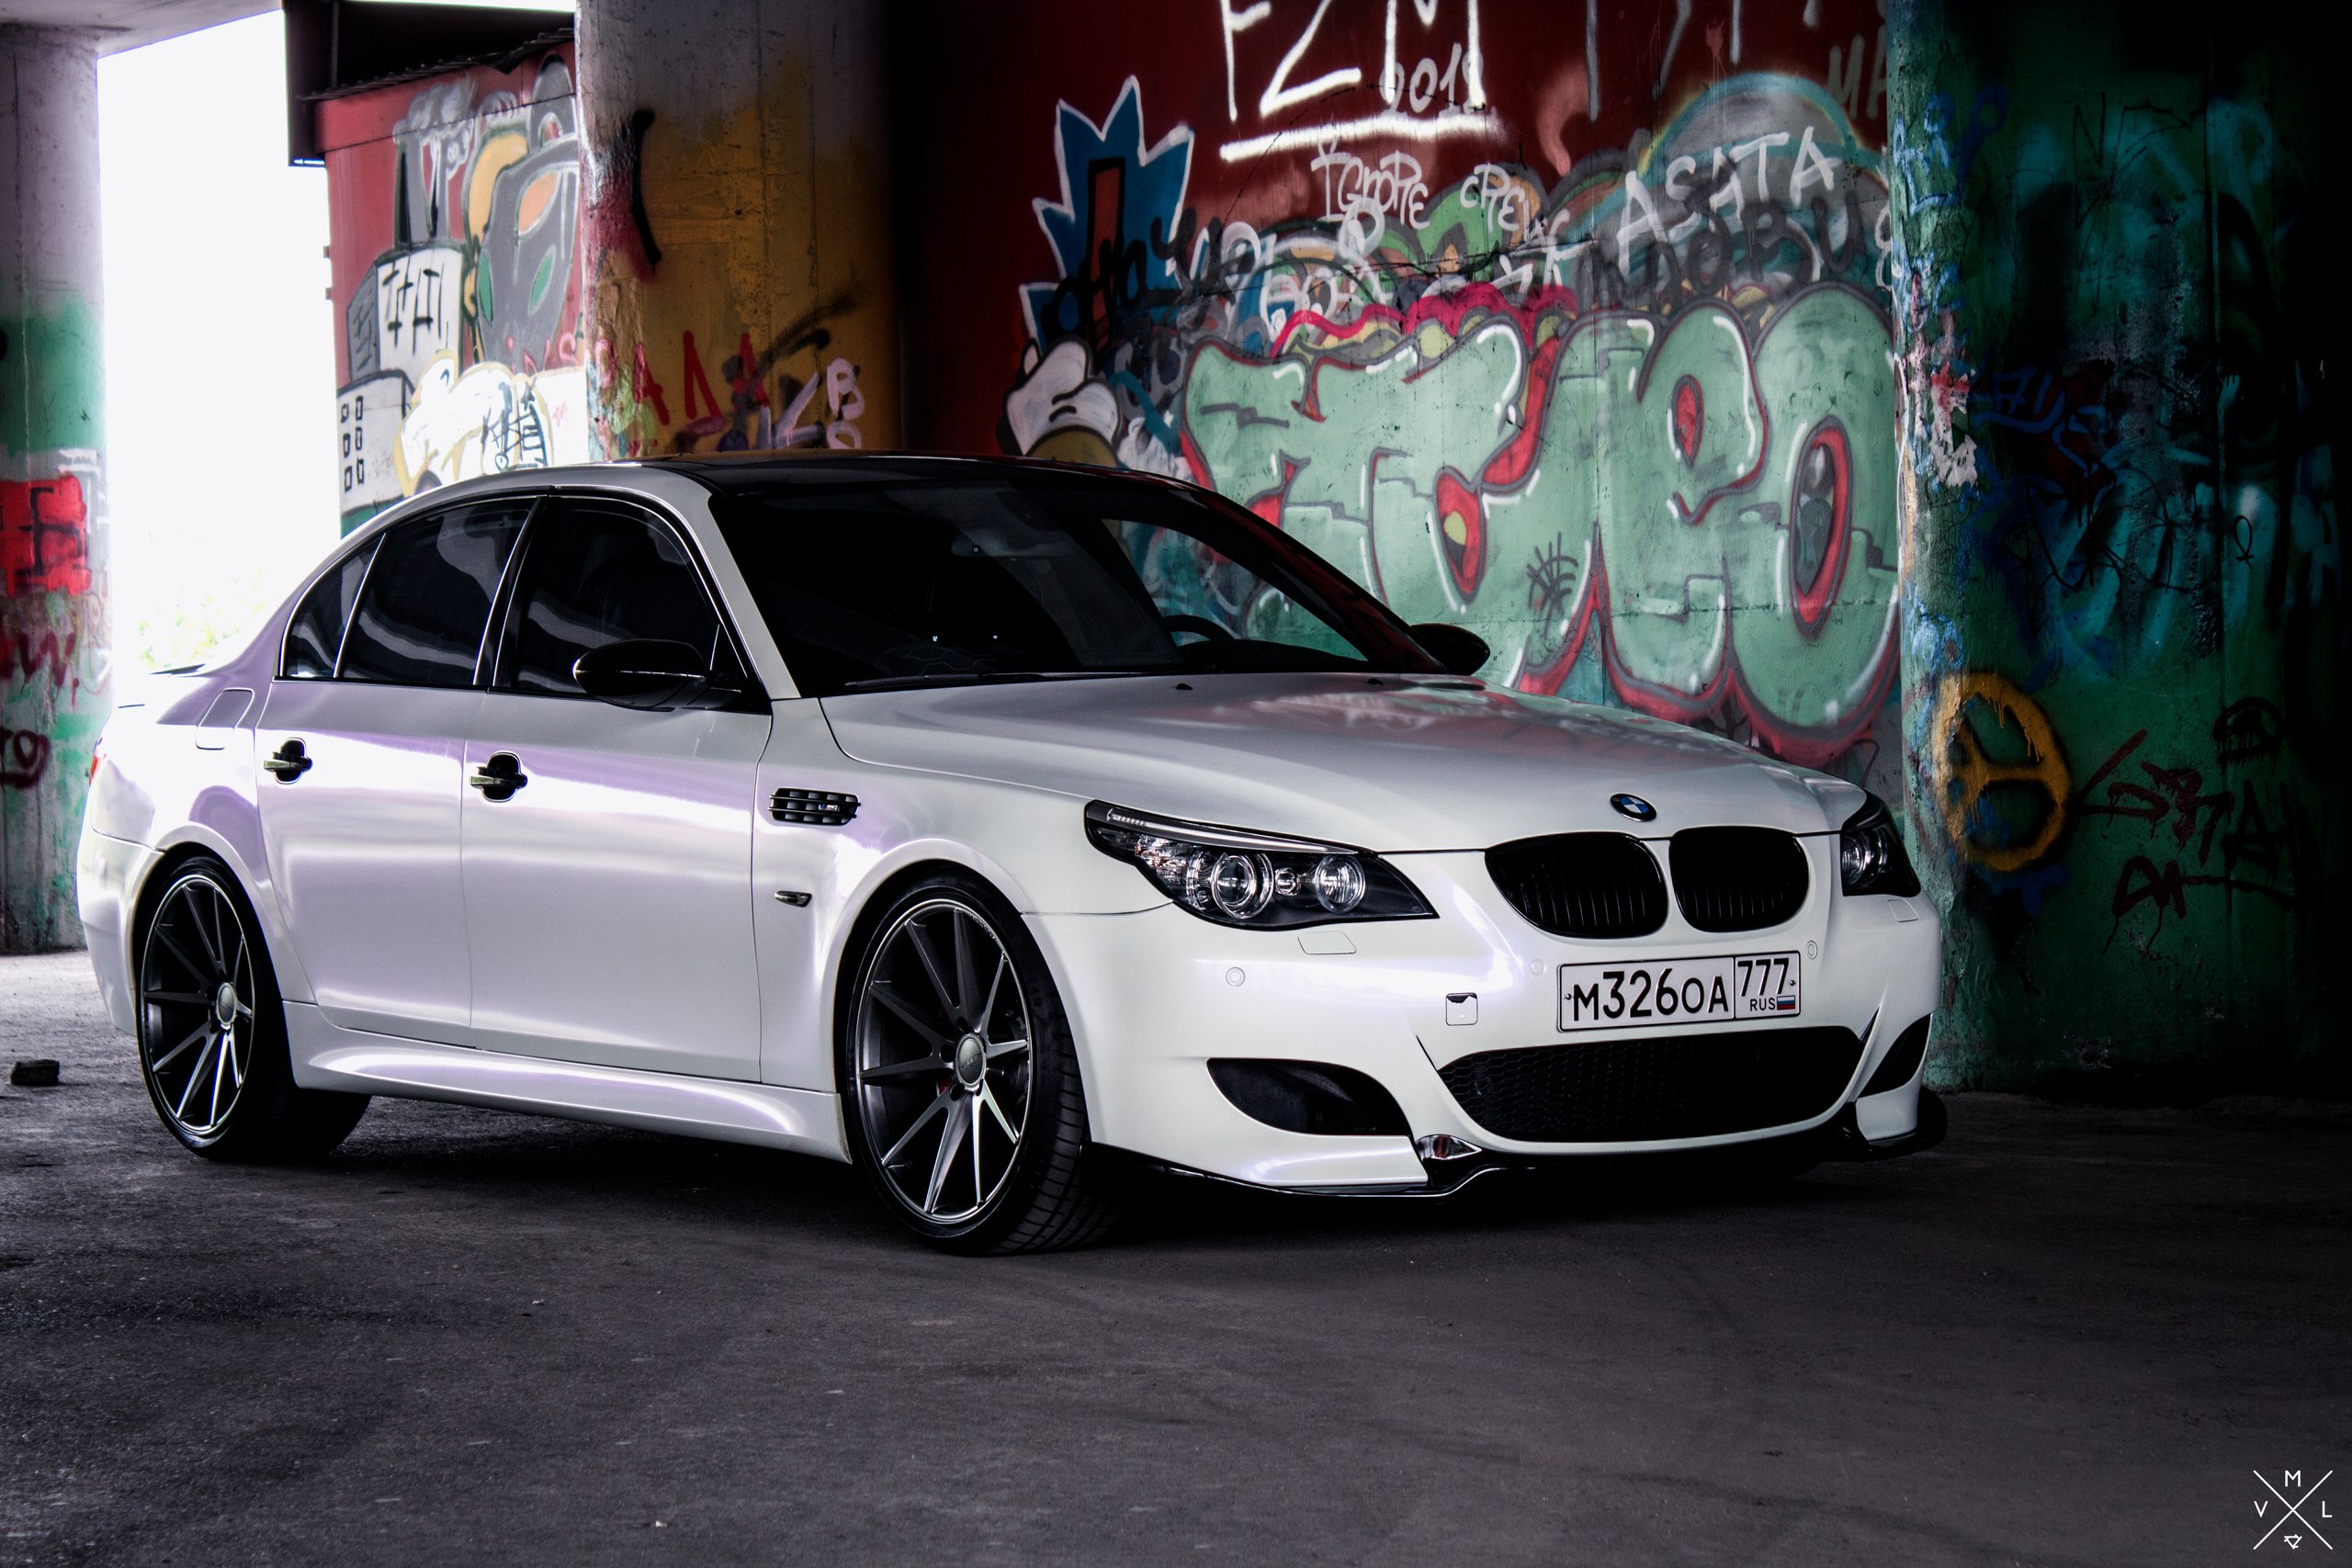 General 2560x1707 BMW M5 vehicle graffiti BMW 5 Series BMW E60 Russian car licence plates watermarked